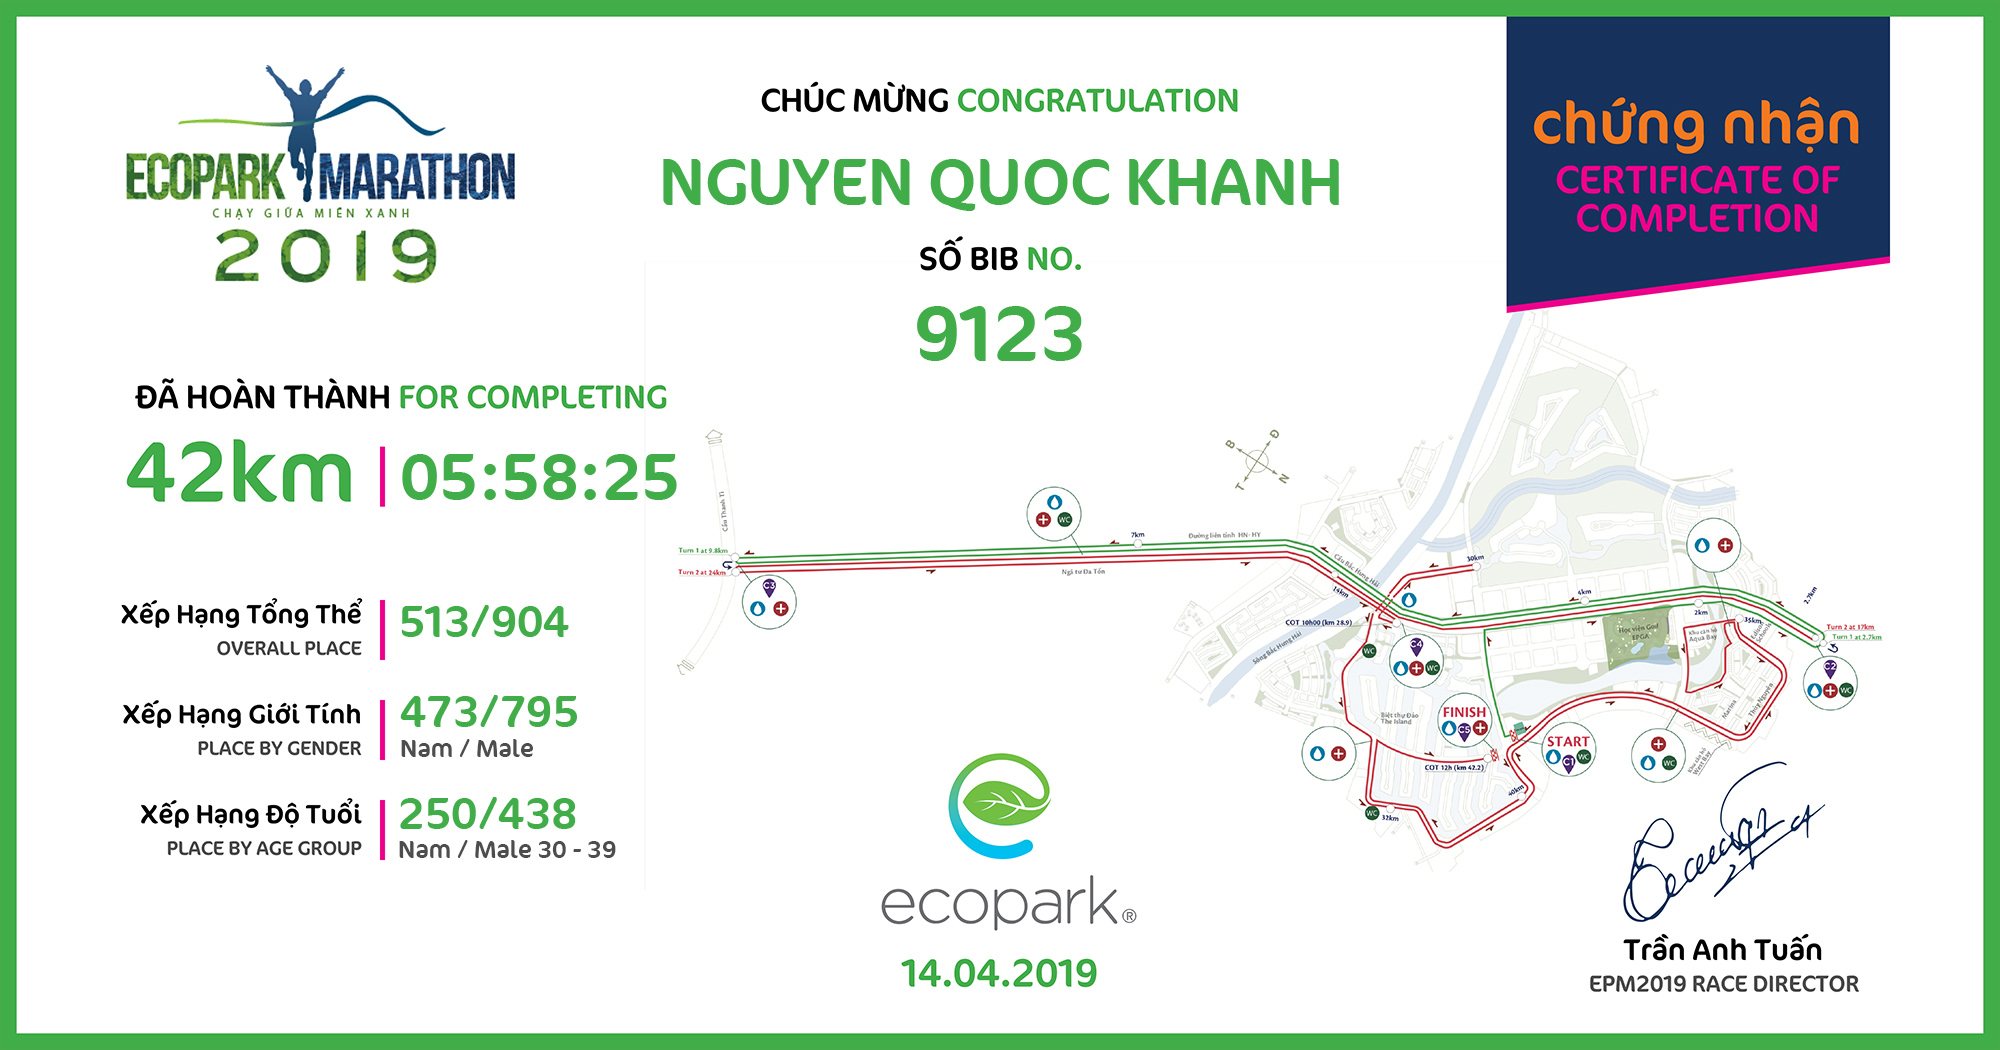 9123 - NGUYEN QUOC KHANH